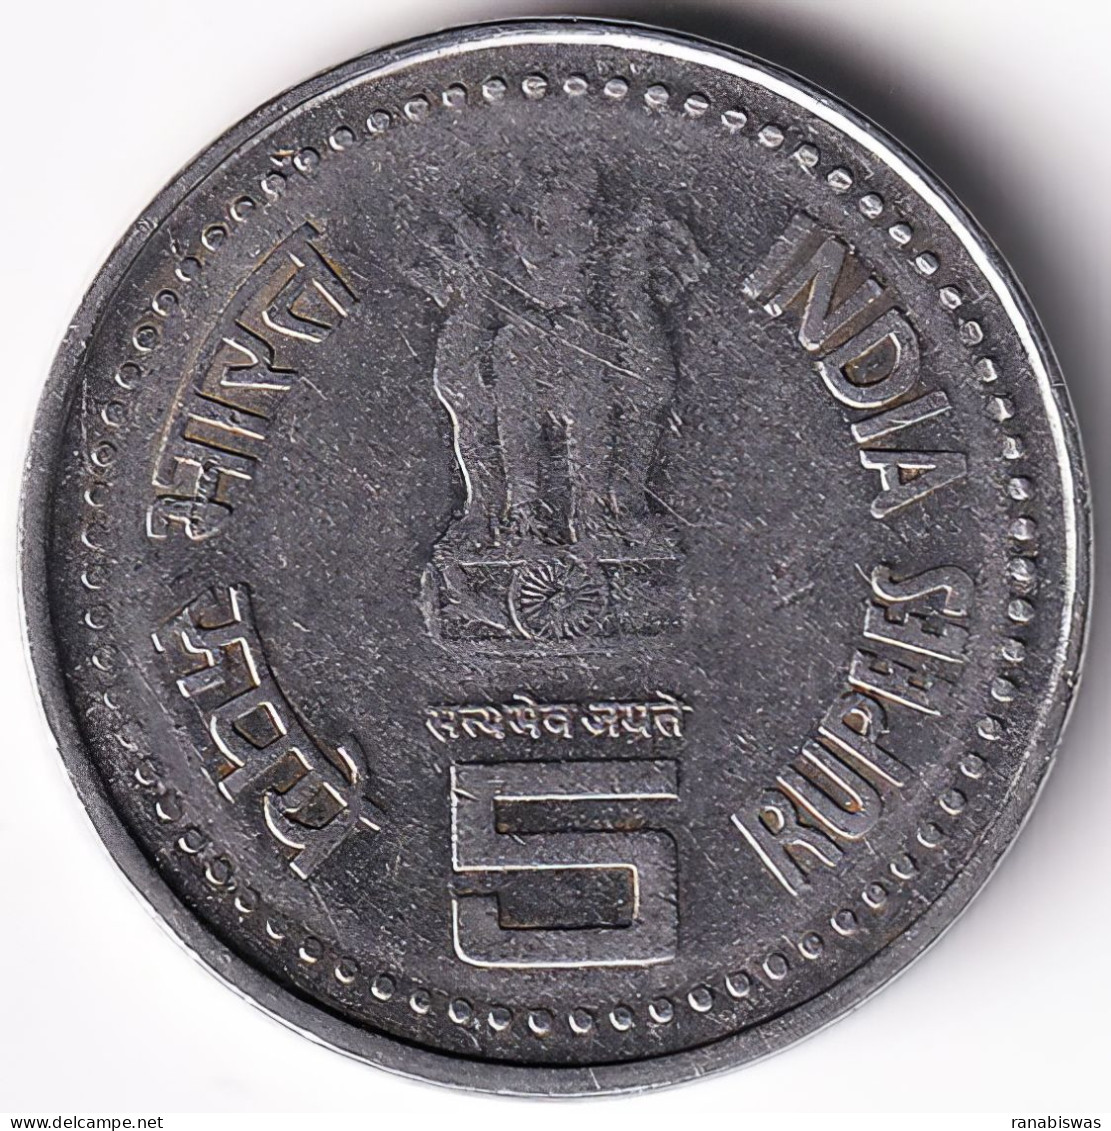 INDIA COIN LOT 141, 5 RUPEES 2006, NARAYAN GURUDEV, BOMBAY MINT, XF - India